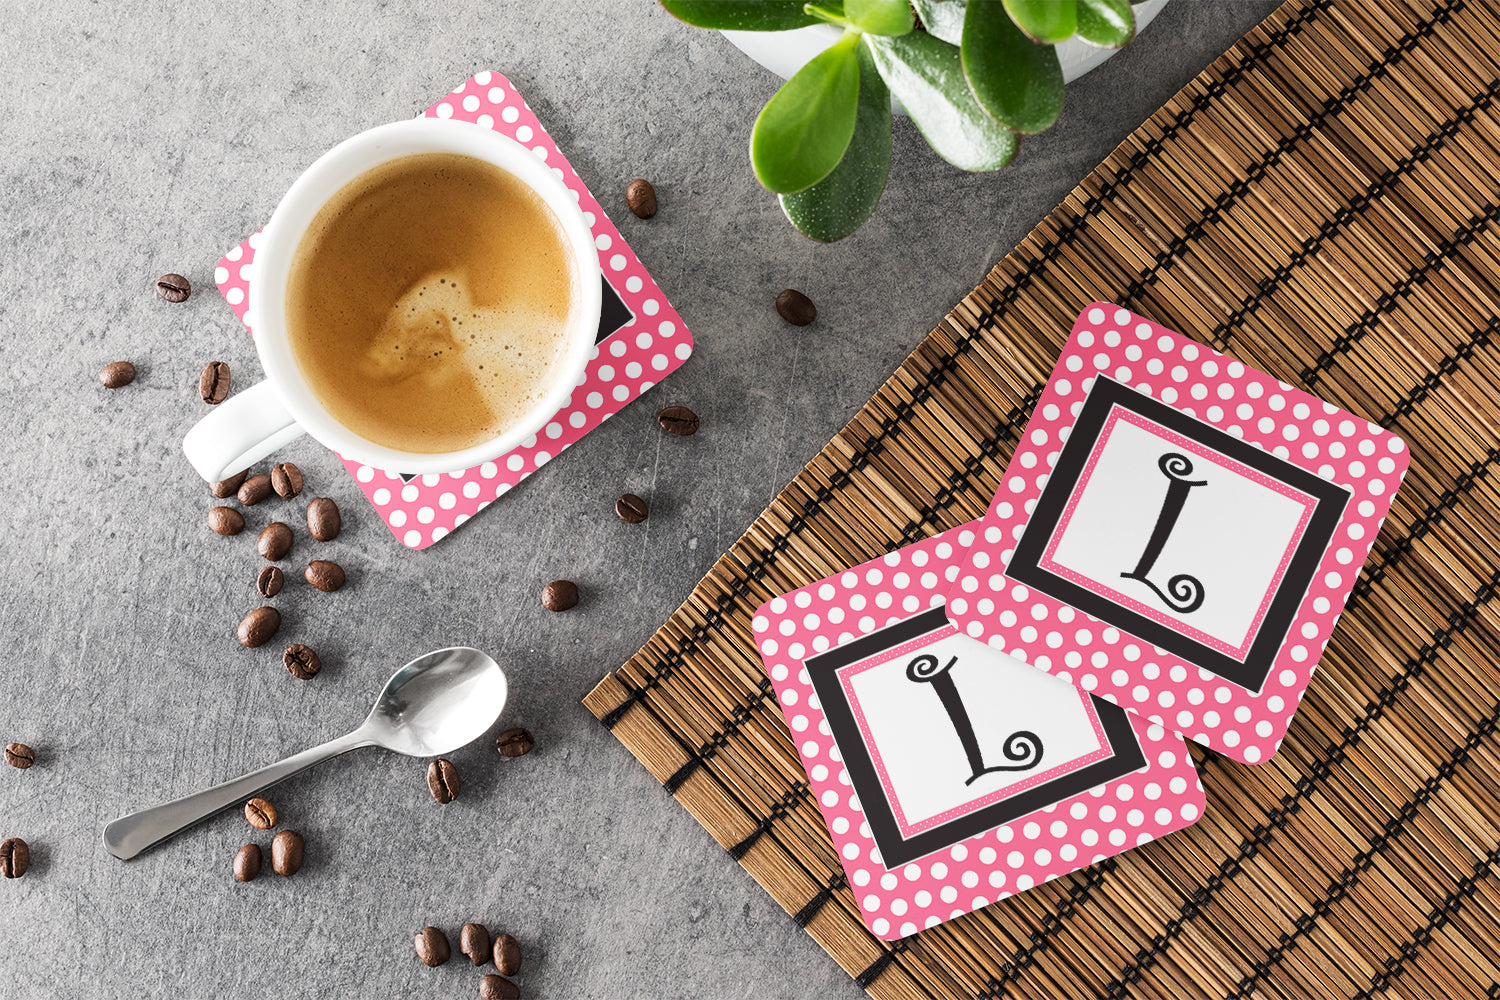 Set of 4 Monogram - Pink Black Polka Dots Foam Coasters Initial Letter L - the-store.com